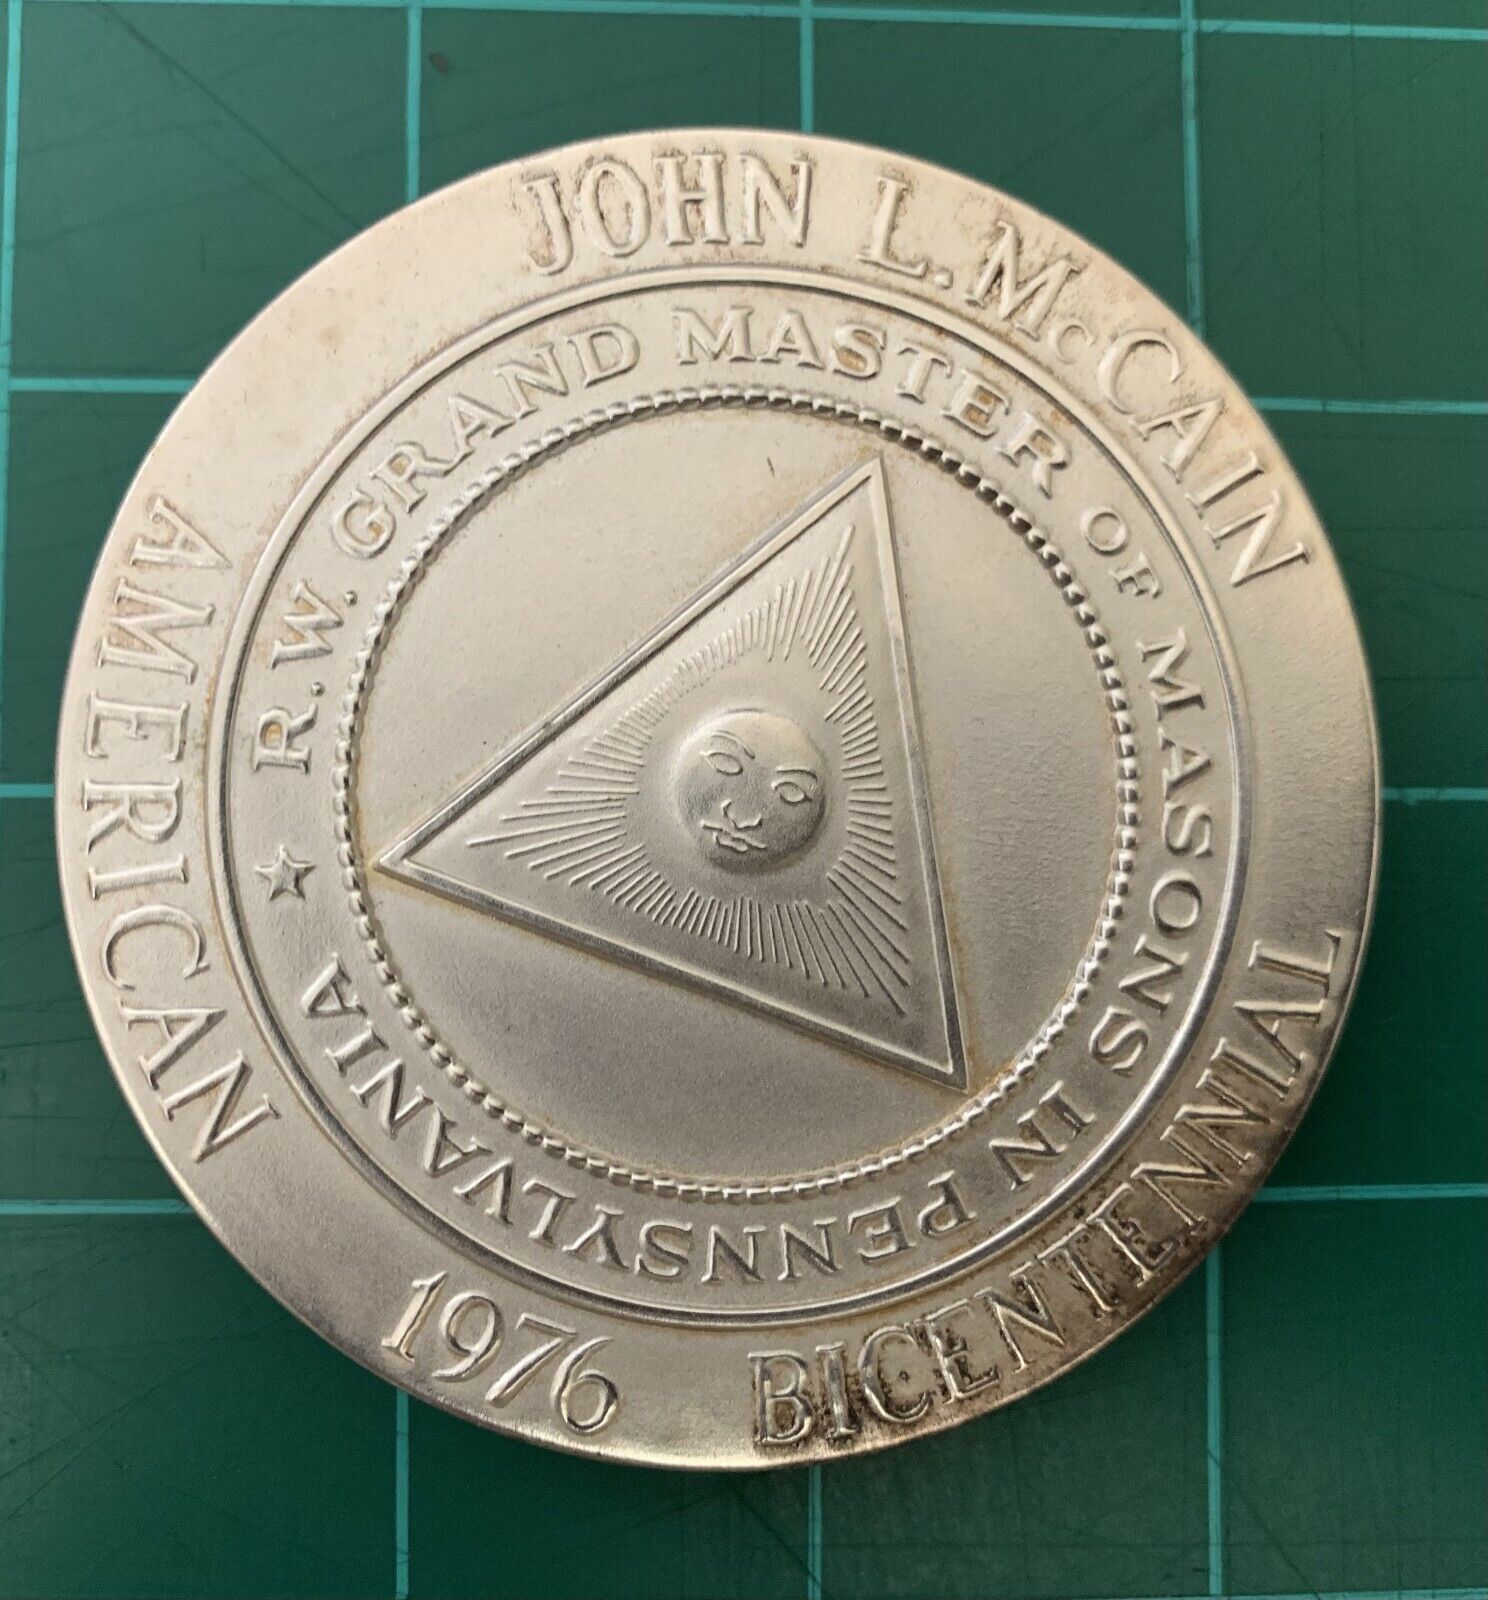 JOHN L McCAIN GRAND MASTER OF MASON PHILADELPHIA 1976 BICENTENNIAL Medal Silver